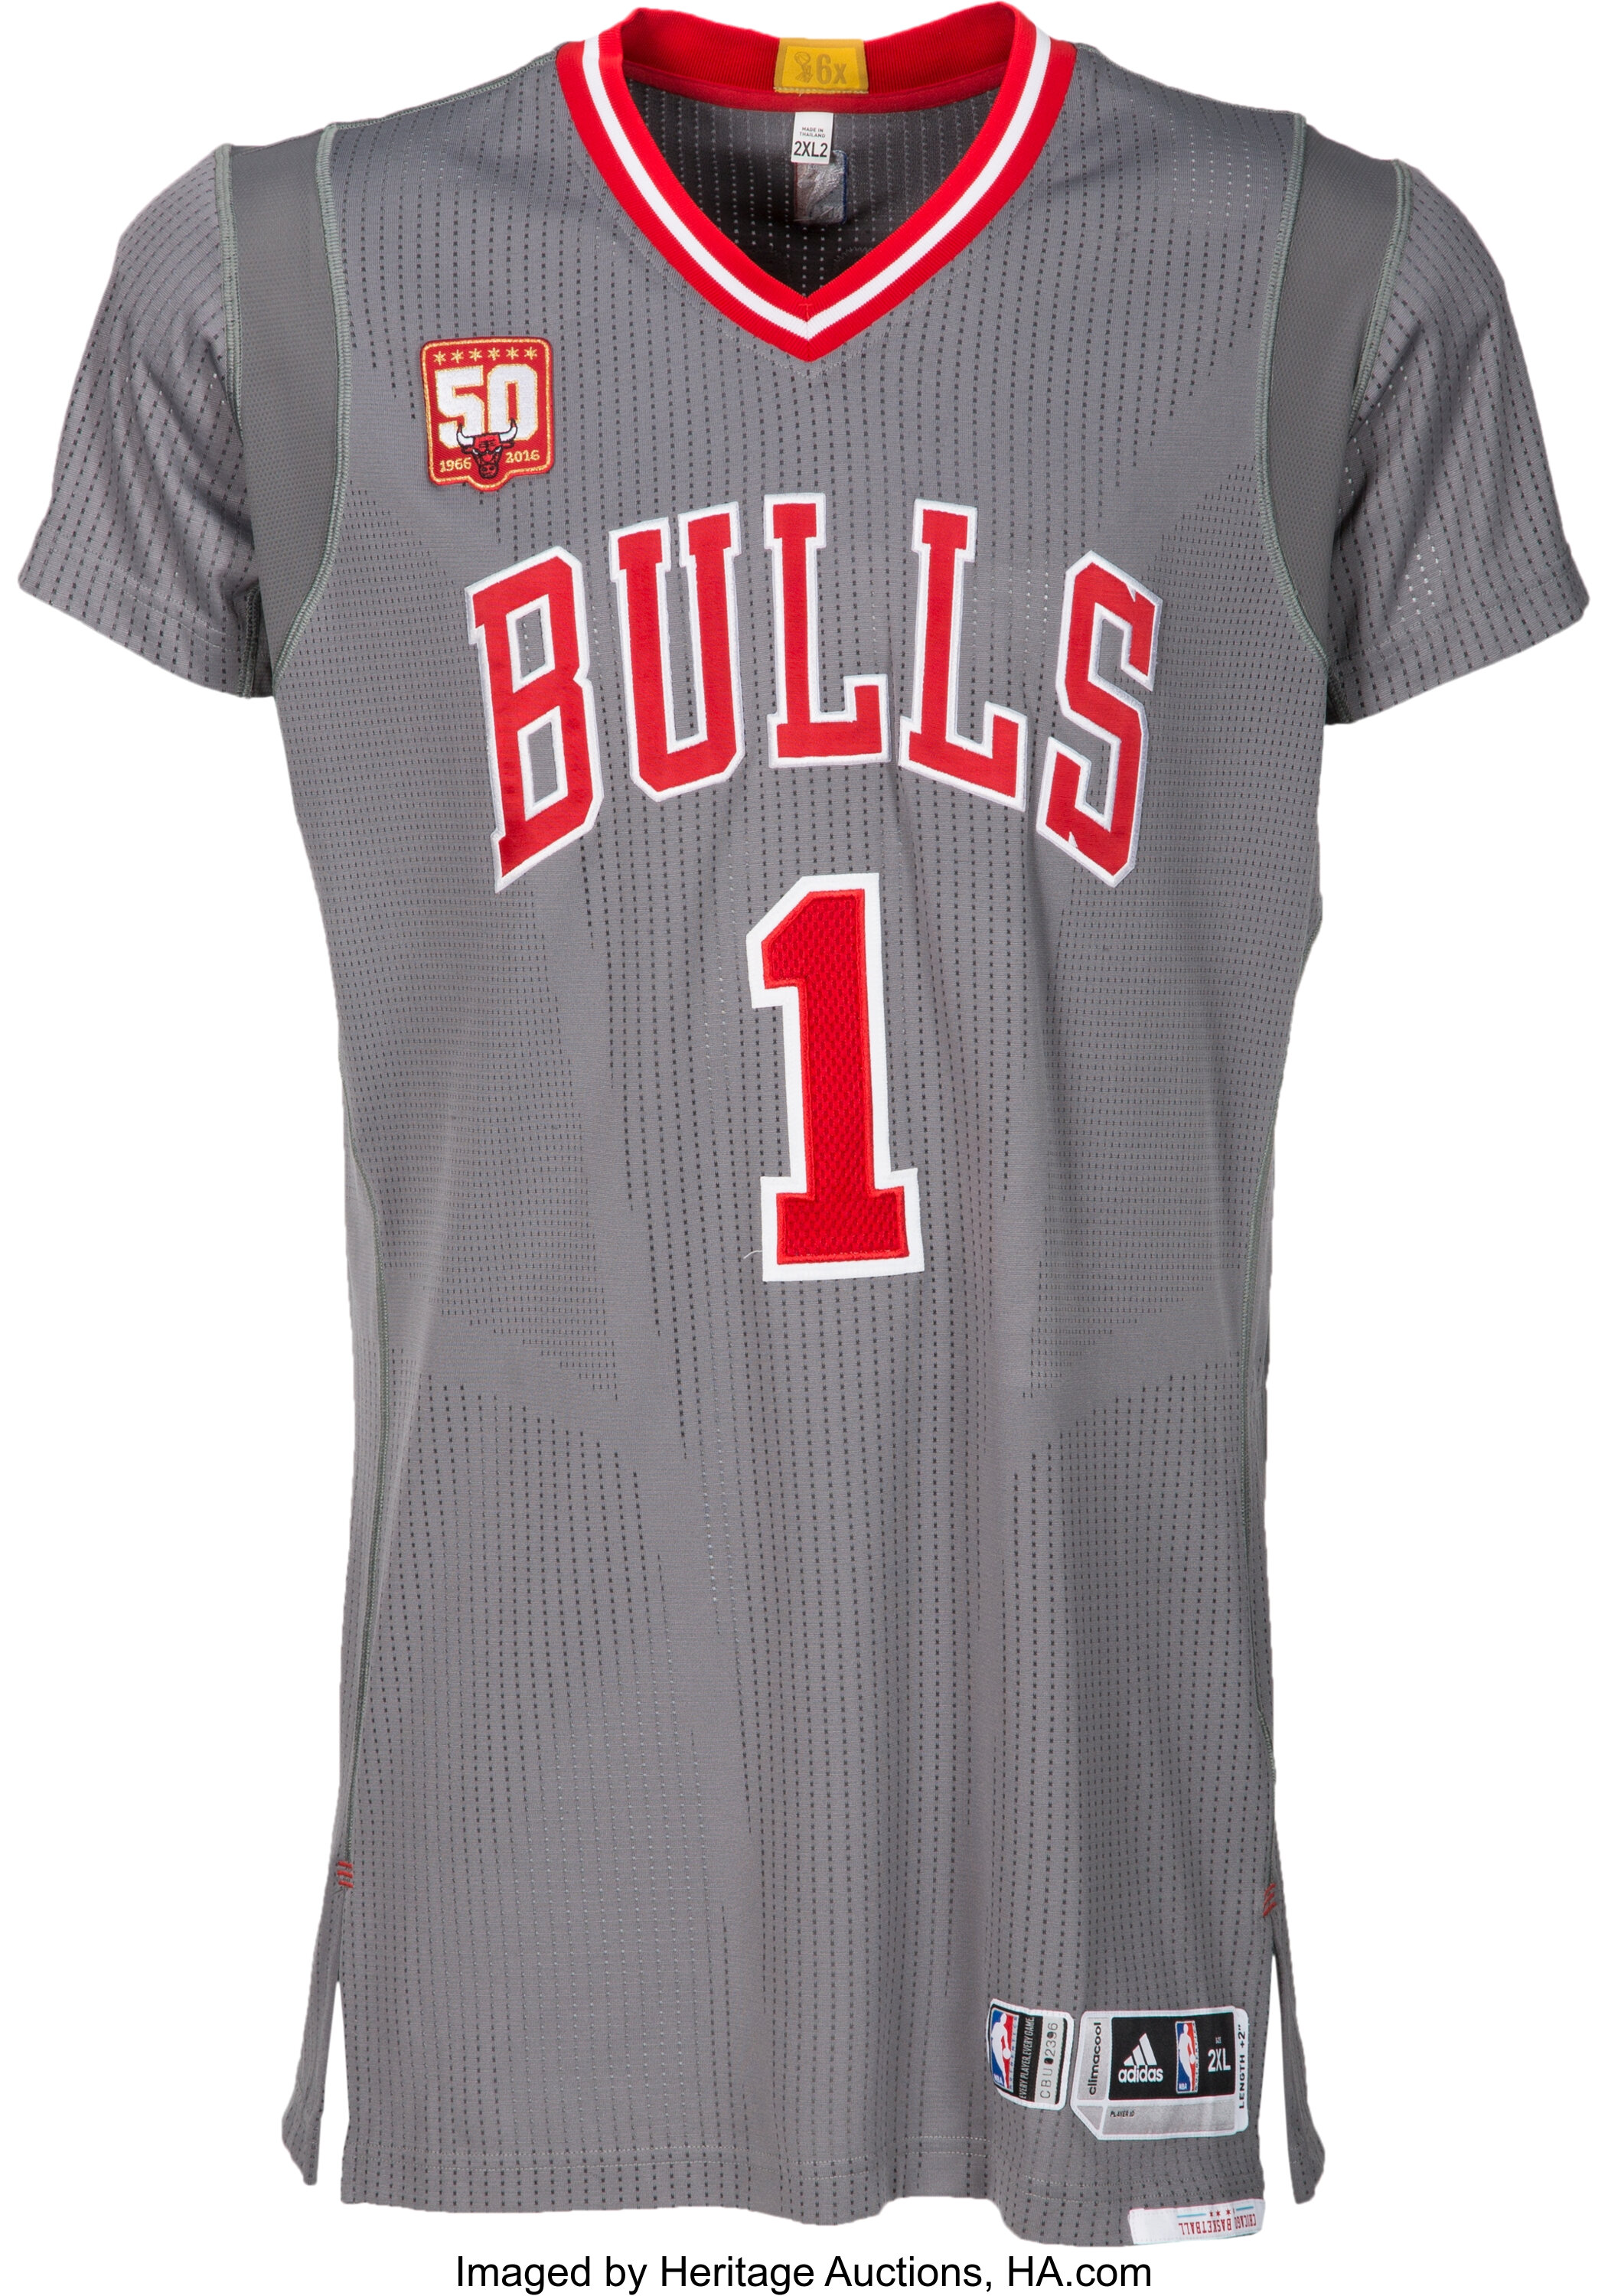 2008-09 Derrick Rose Game Worn, Signed Chicago Bulls Rookie Jersey